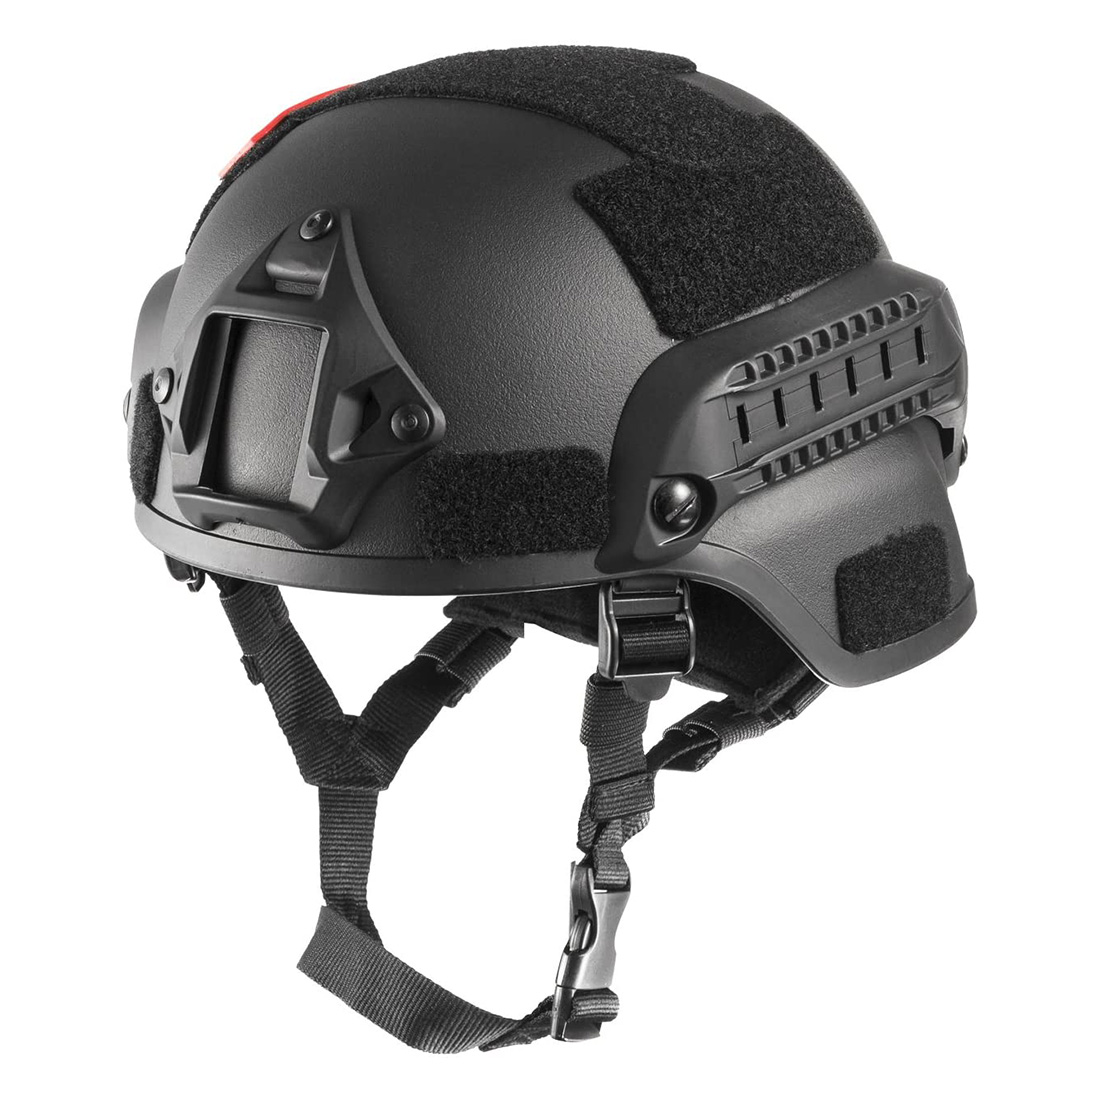 Bulletproof helmet development and development route